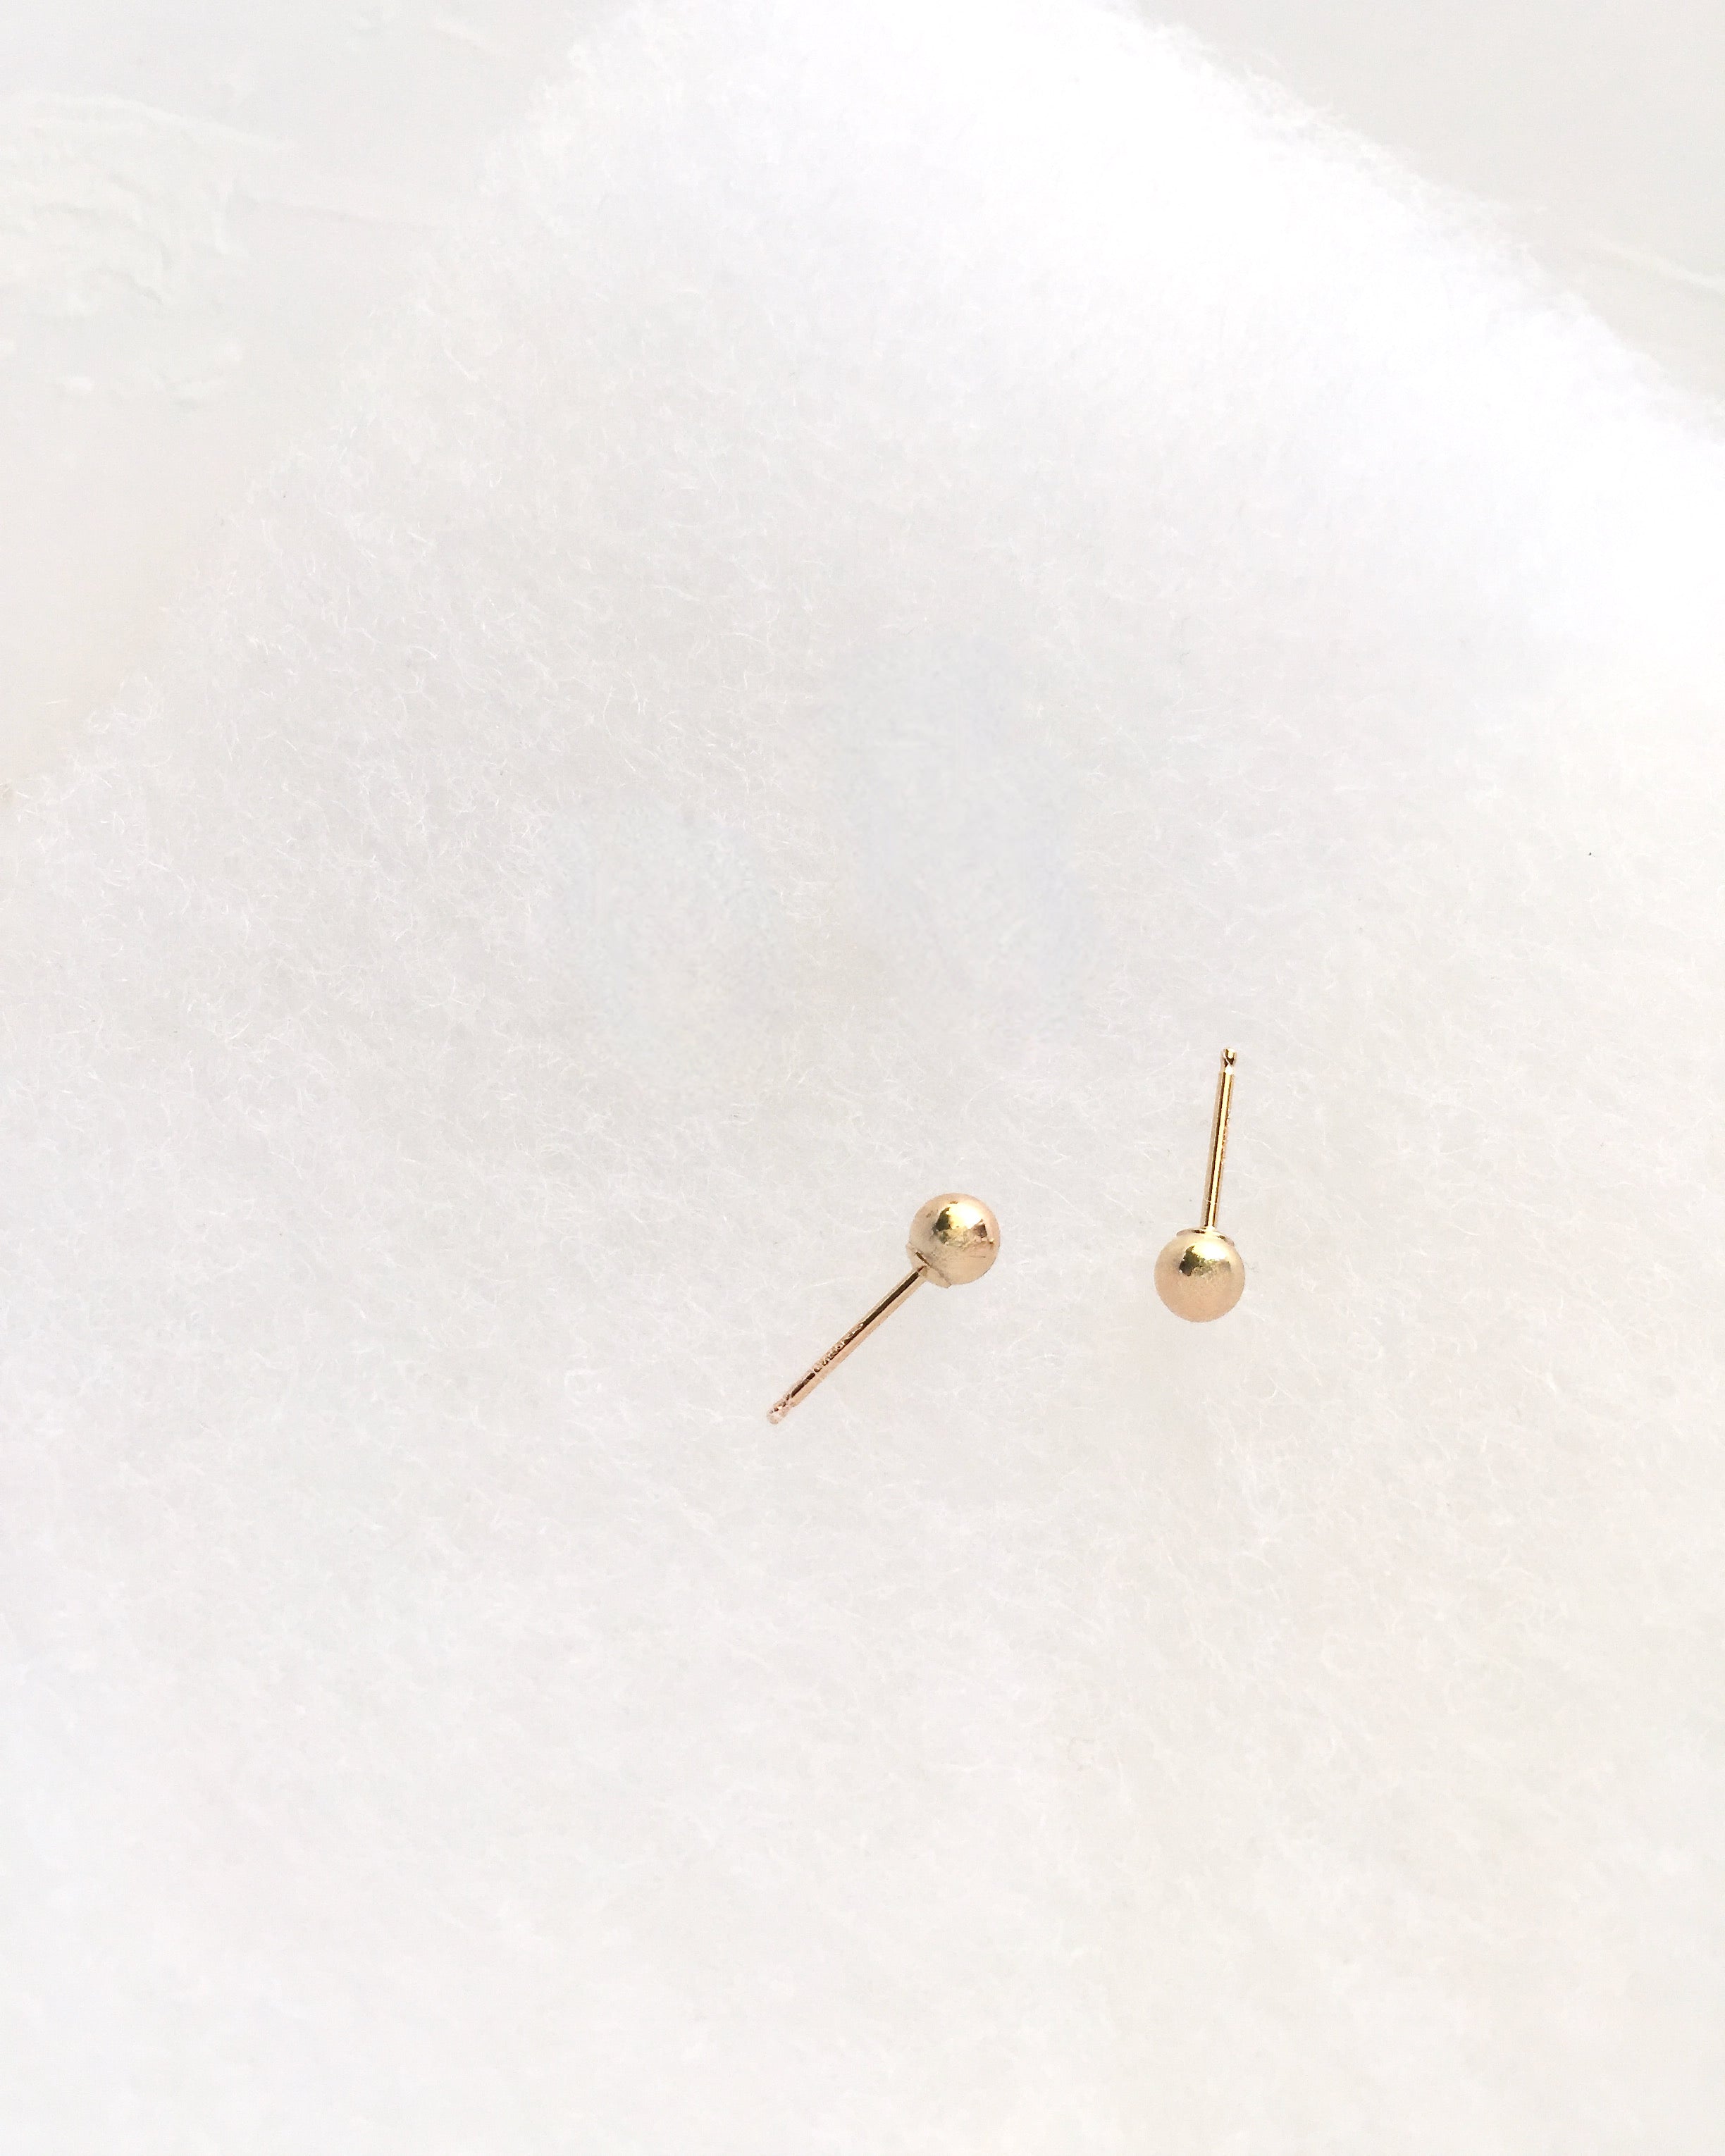 22K Gold Hoop Earrings (Ear Bali) For Baby With Cz - 235-GER11638 in 1.350  Grams